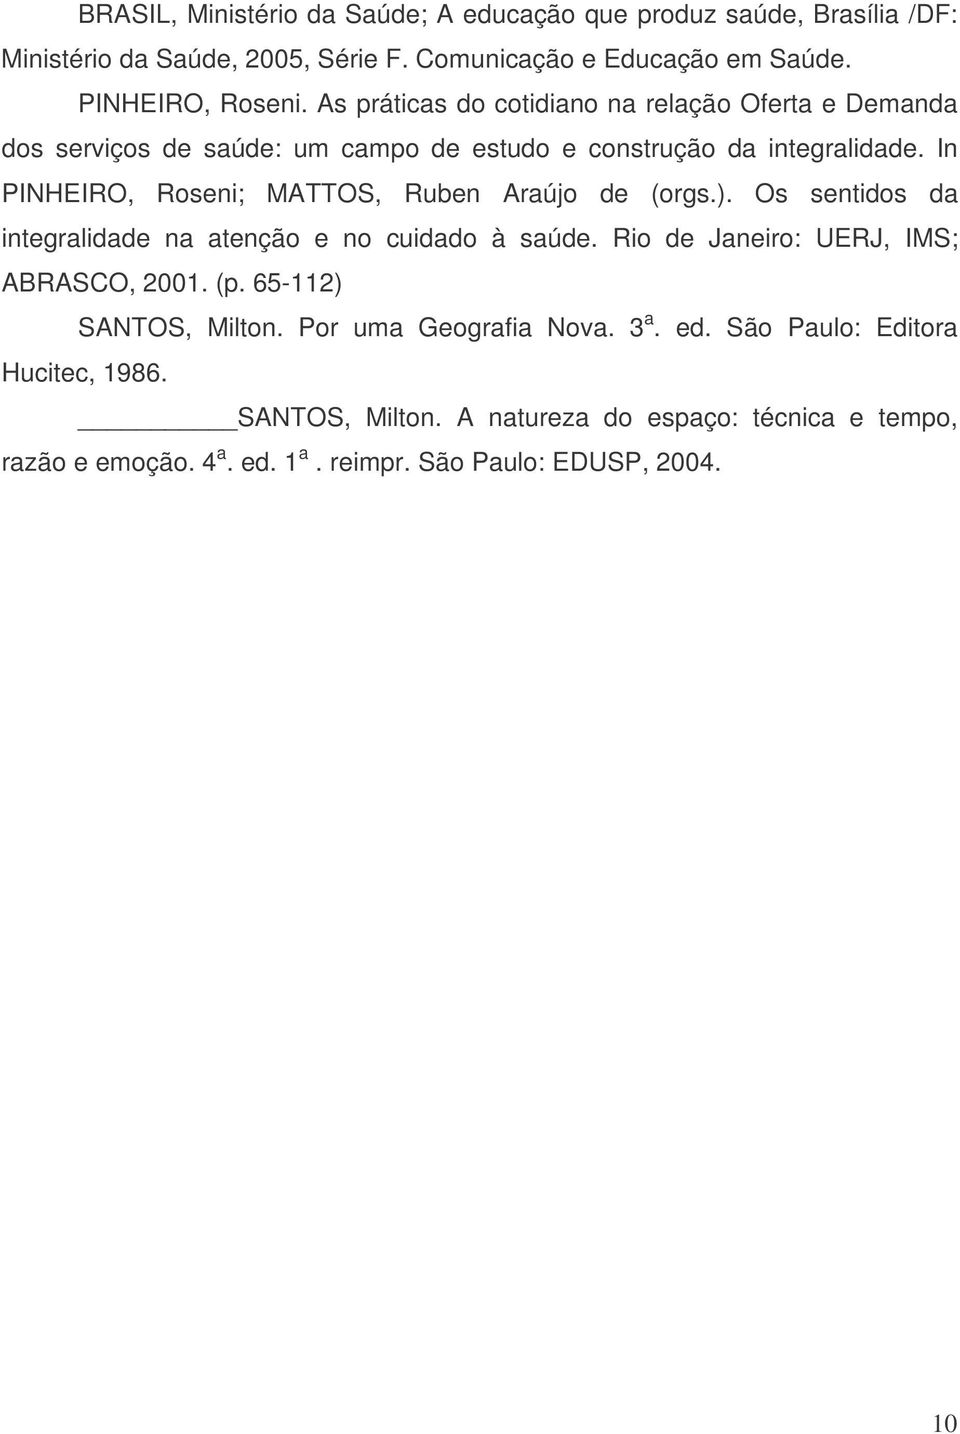 In PINHEIRO, Roseni; MATTOS, Ruben Araújo de (orgs.). Os sentidos da integralidade na atenção e no cuidado à saúde. Rio de Janeiro: UERJ, IMS; ABRASCO, 2001. (p.